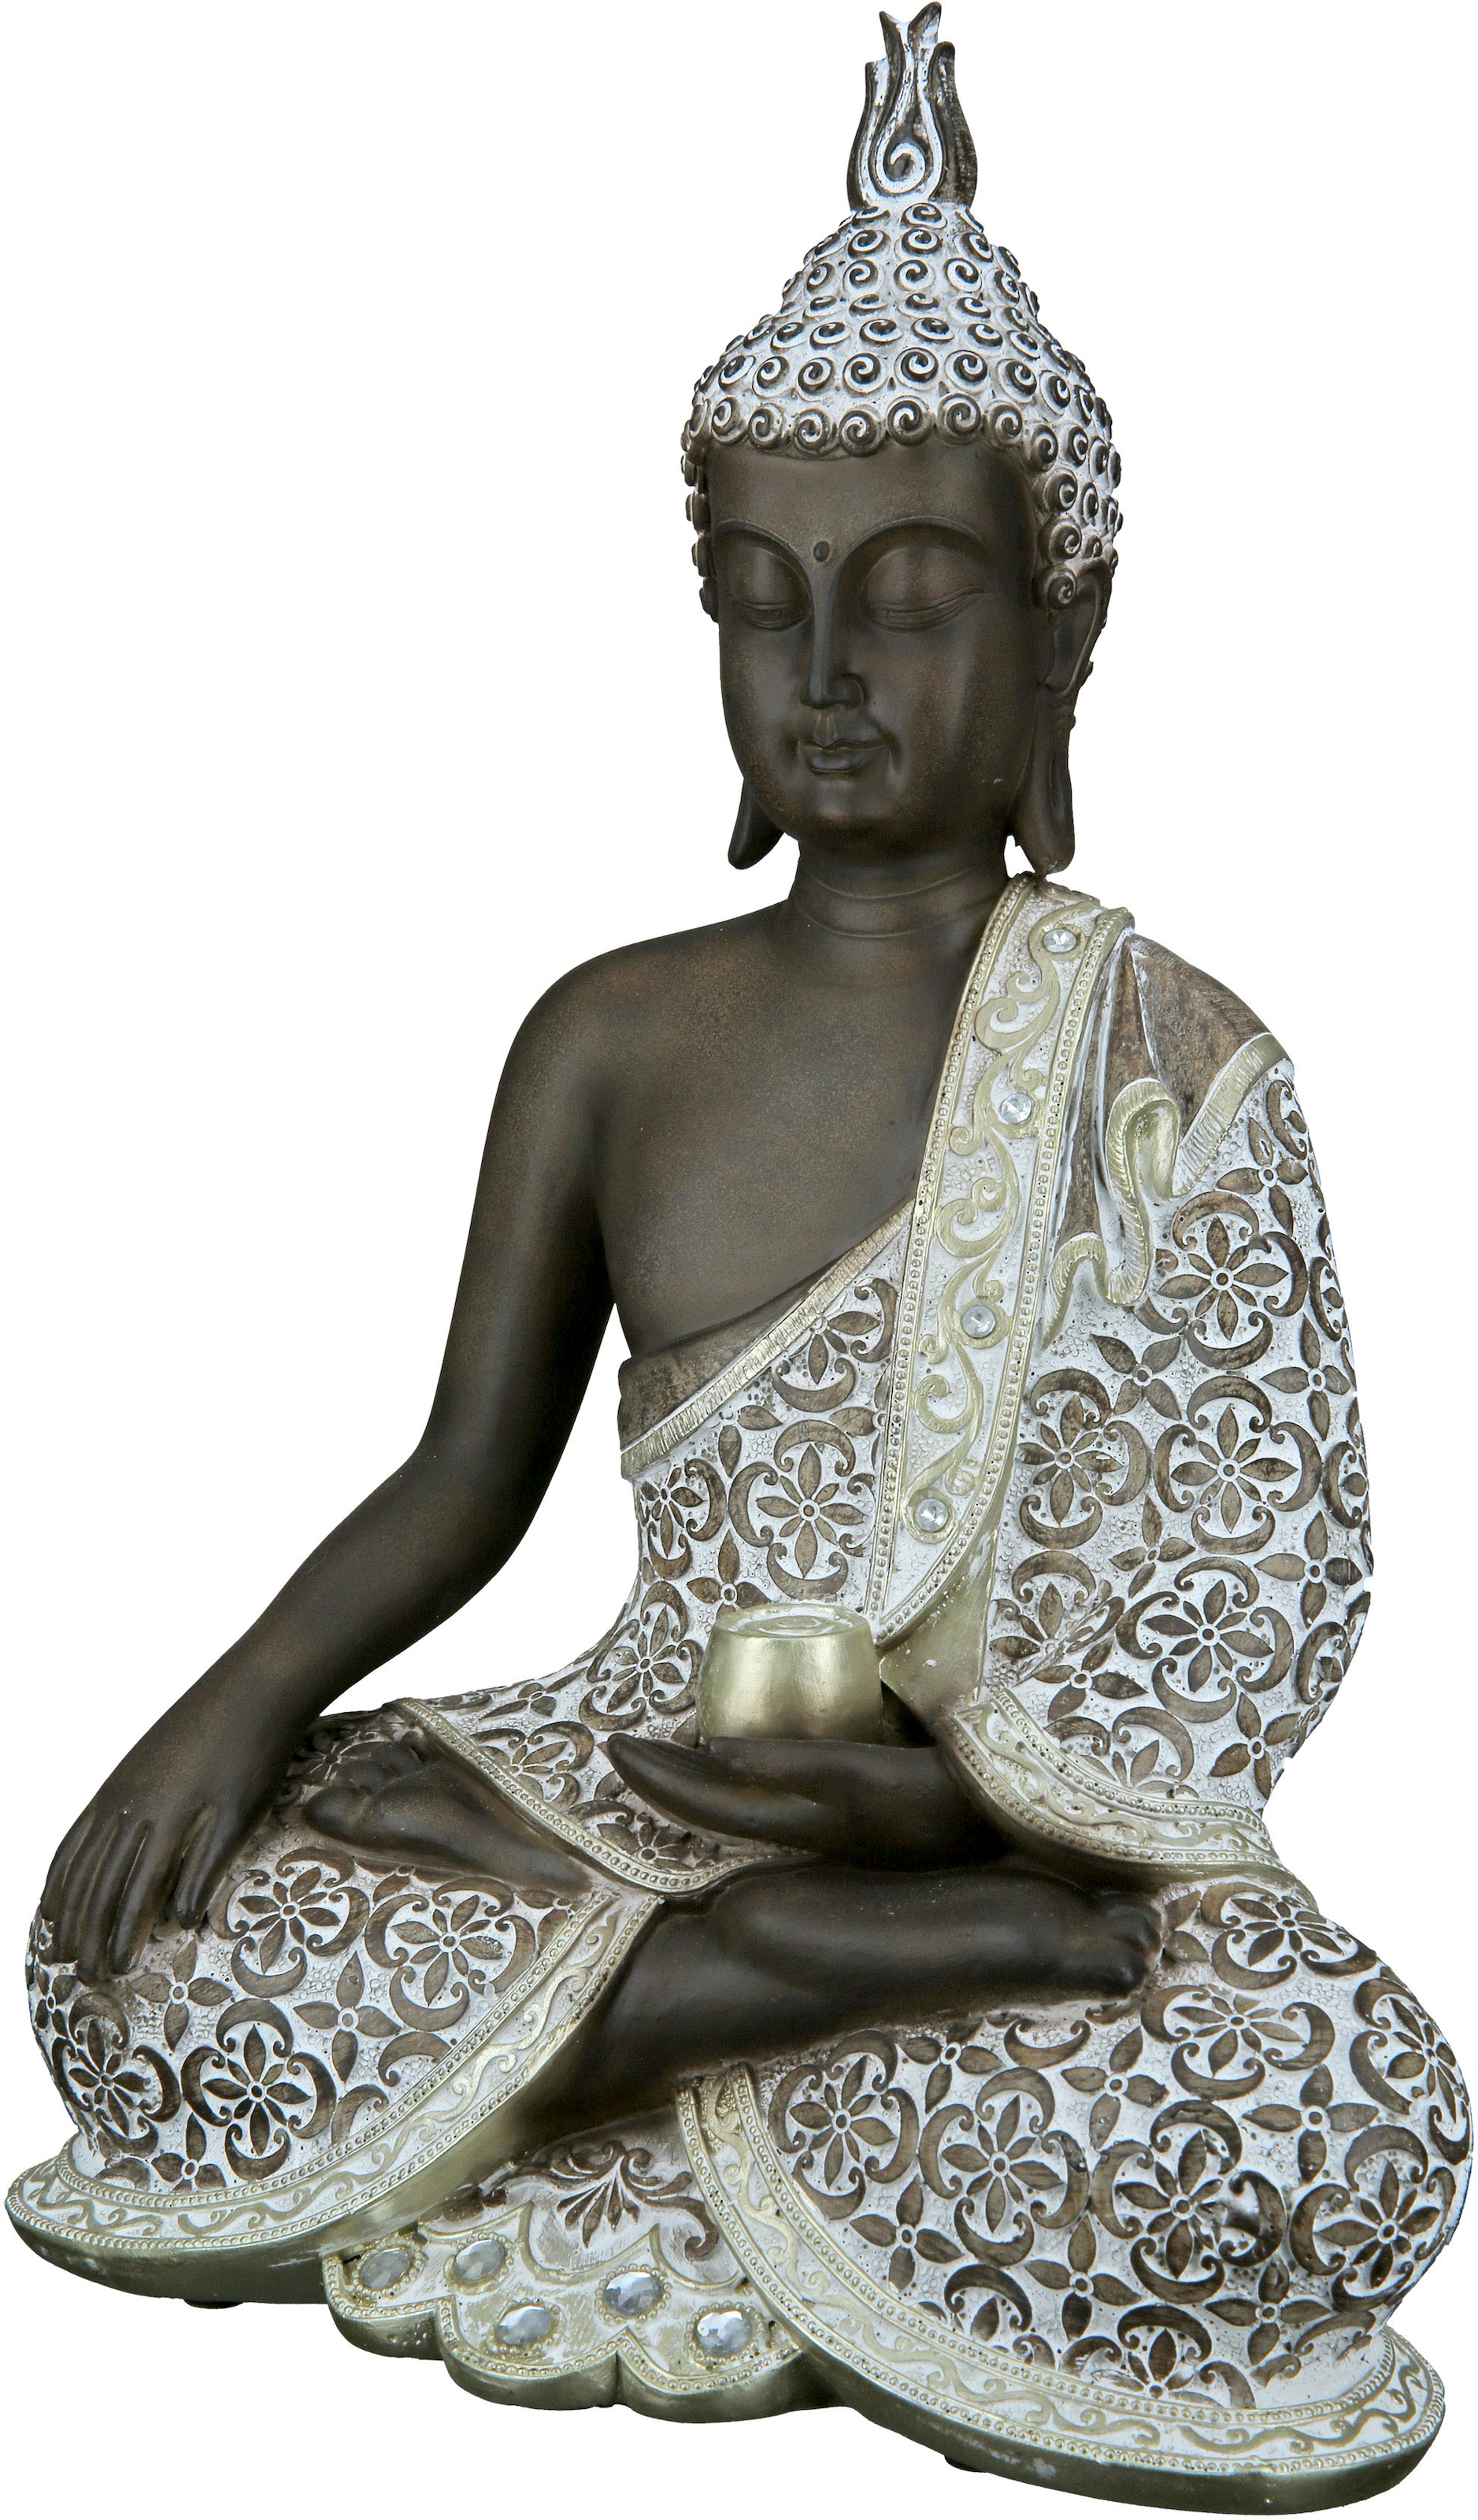 GILDE Buddhafigur »Buddha Mangala braun-weiss« bequem kaufen